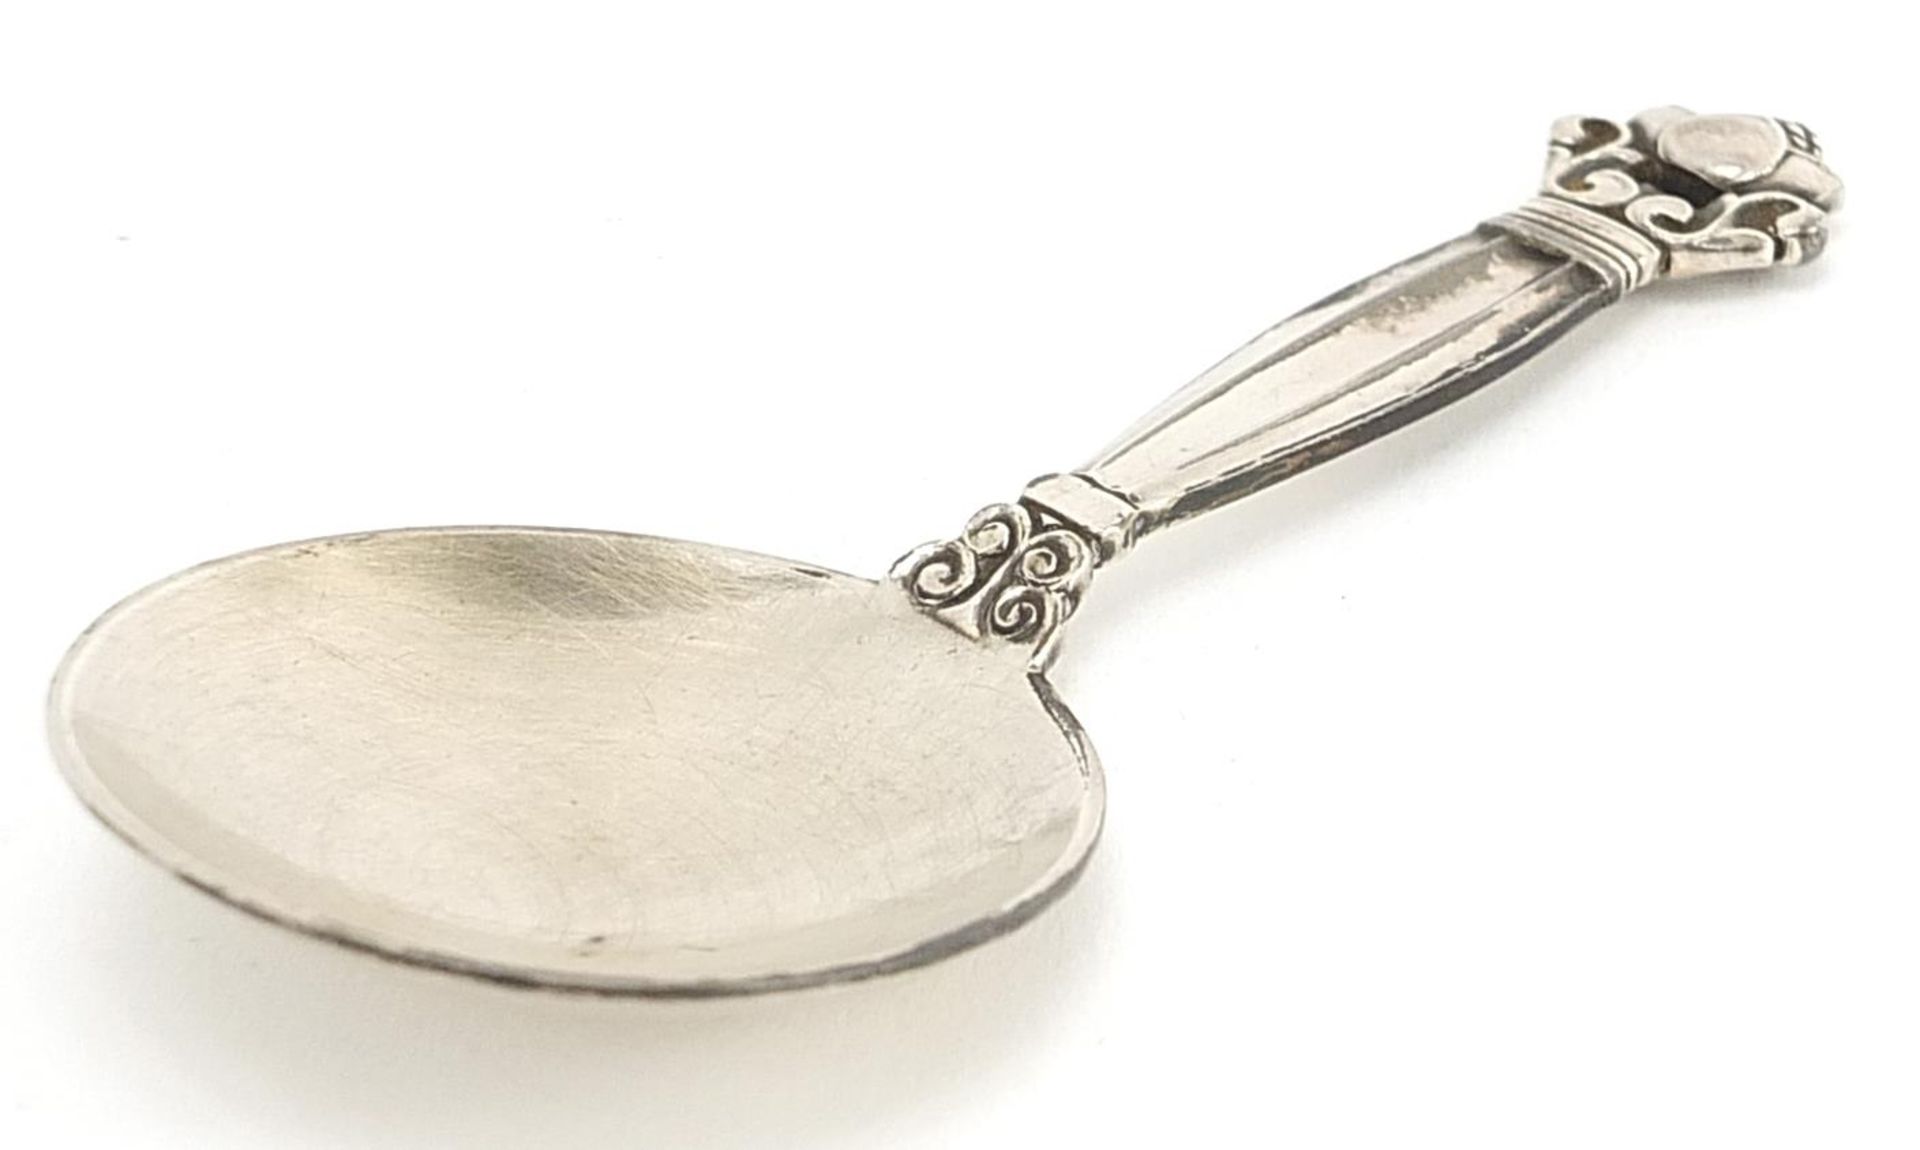 Georg Jensen, Danish silver acorn caddy spoon, London 1948 import marks, 10.5cm in length, 25.2g